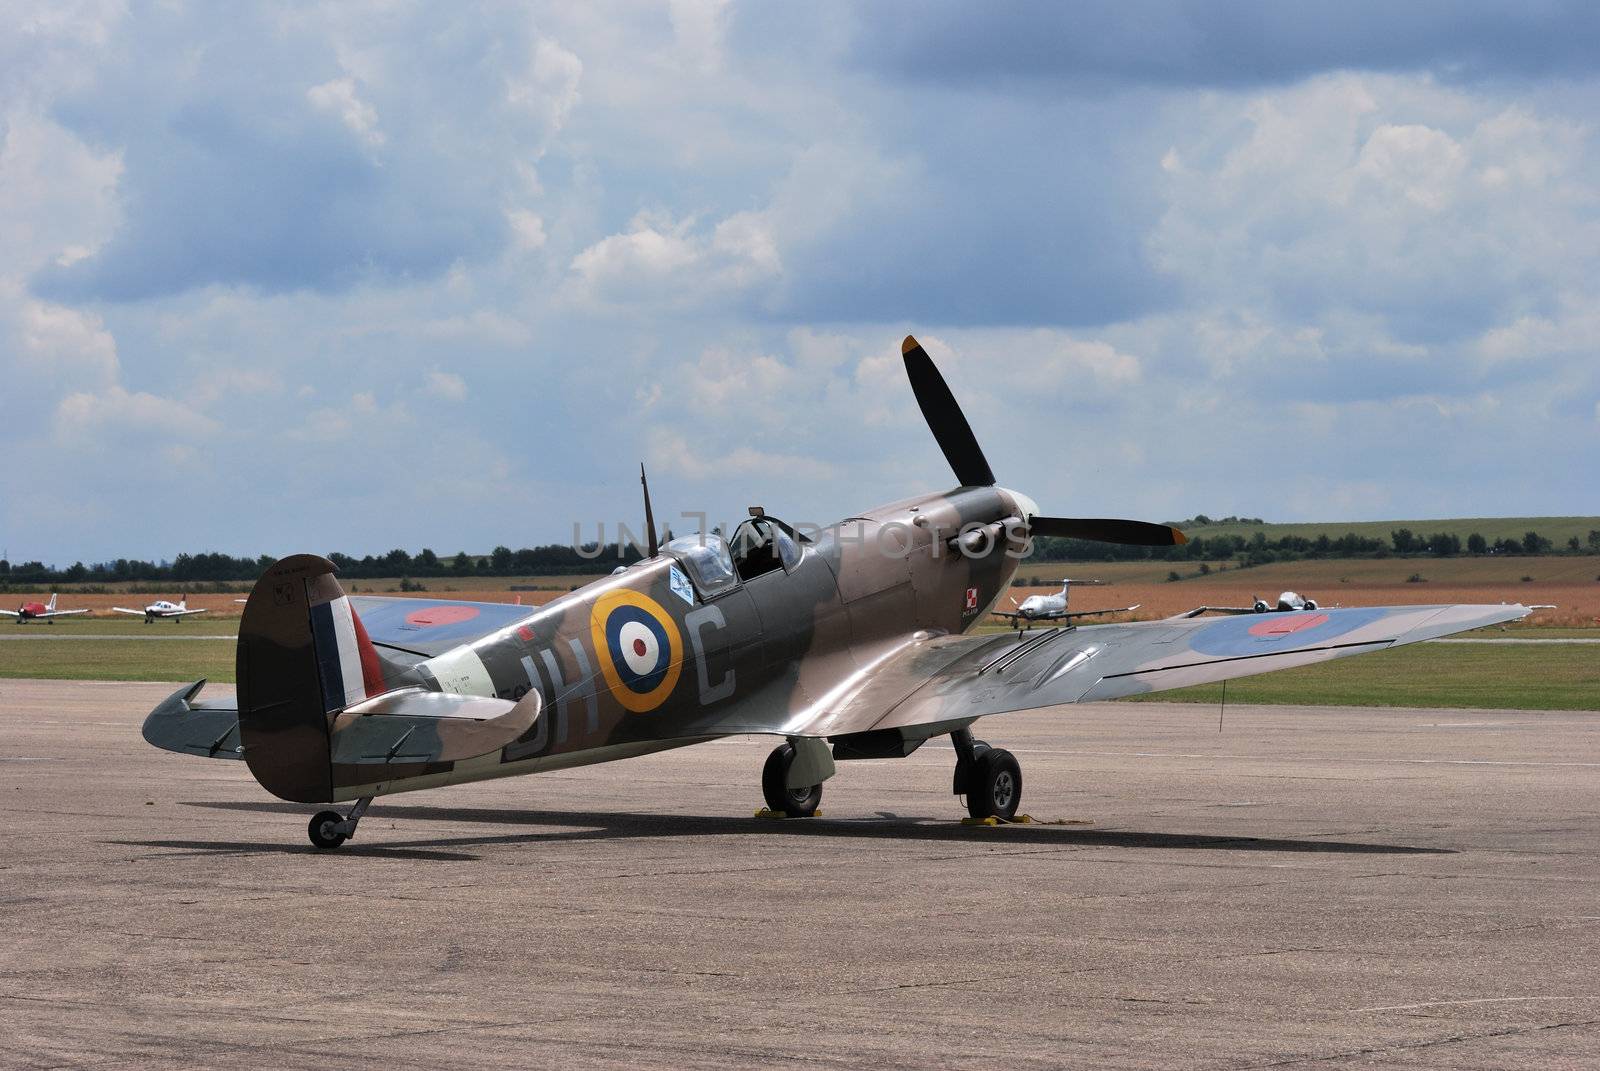 spitfire plane standing on runway